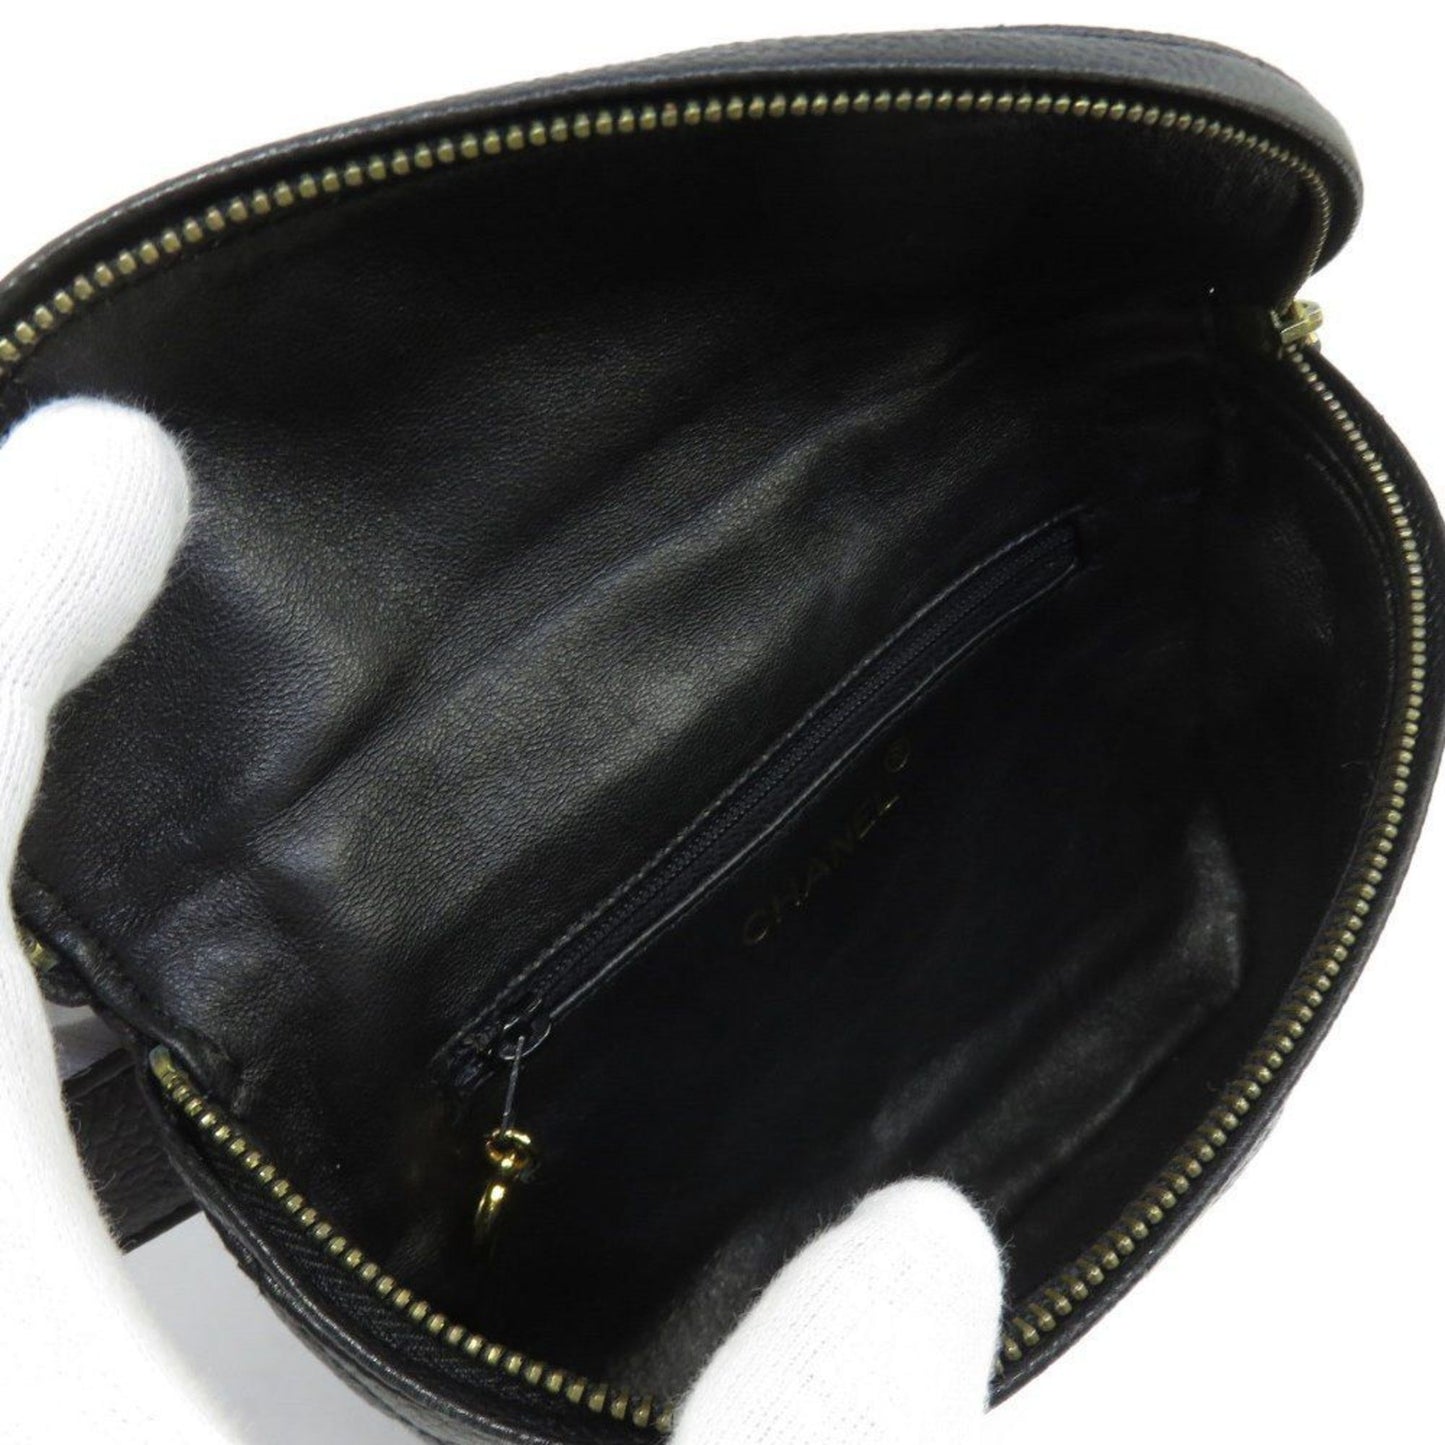 Chanel Women's Elegant Black Leather Clutch Bag in Black